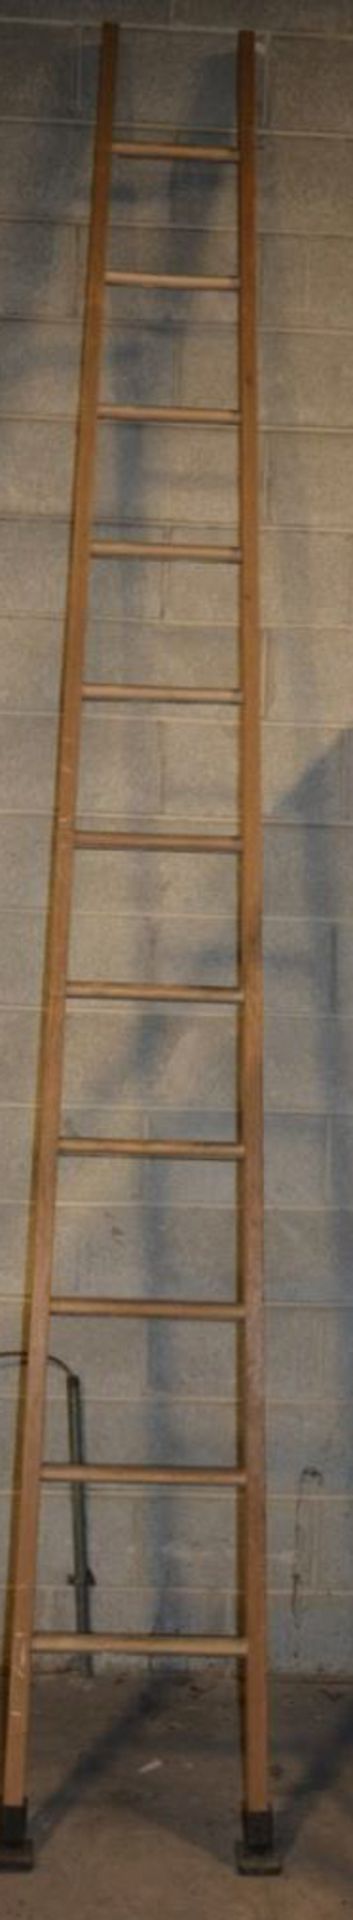 John Berg Industrial 12' Wood Straight Ladder